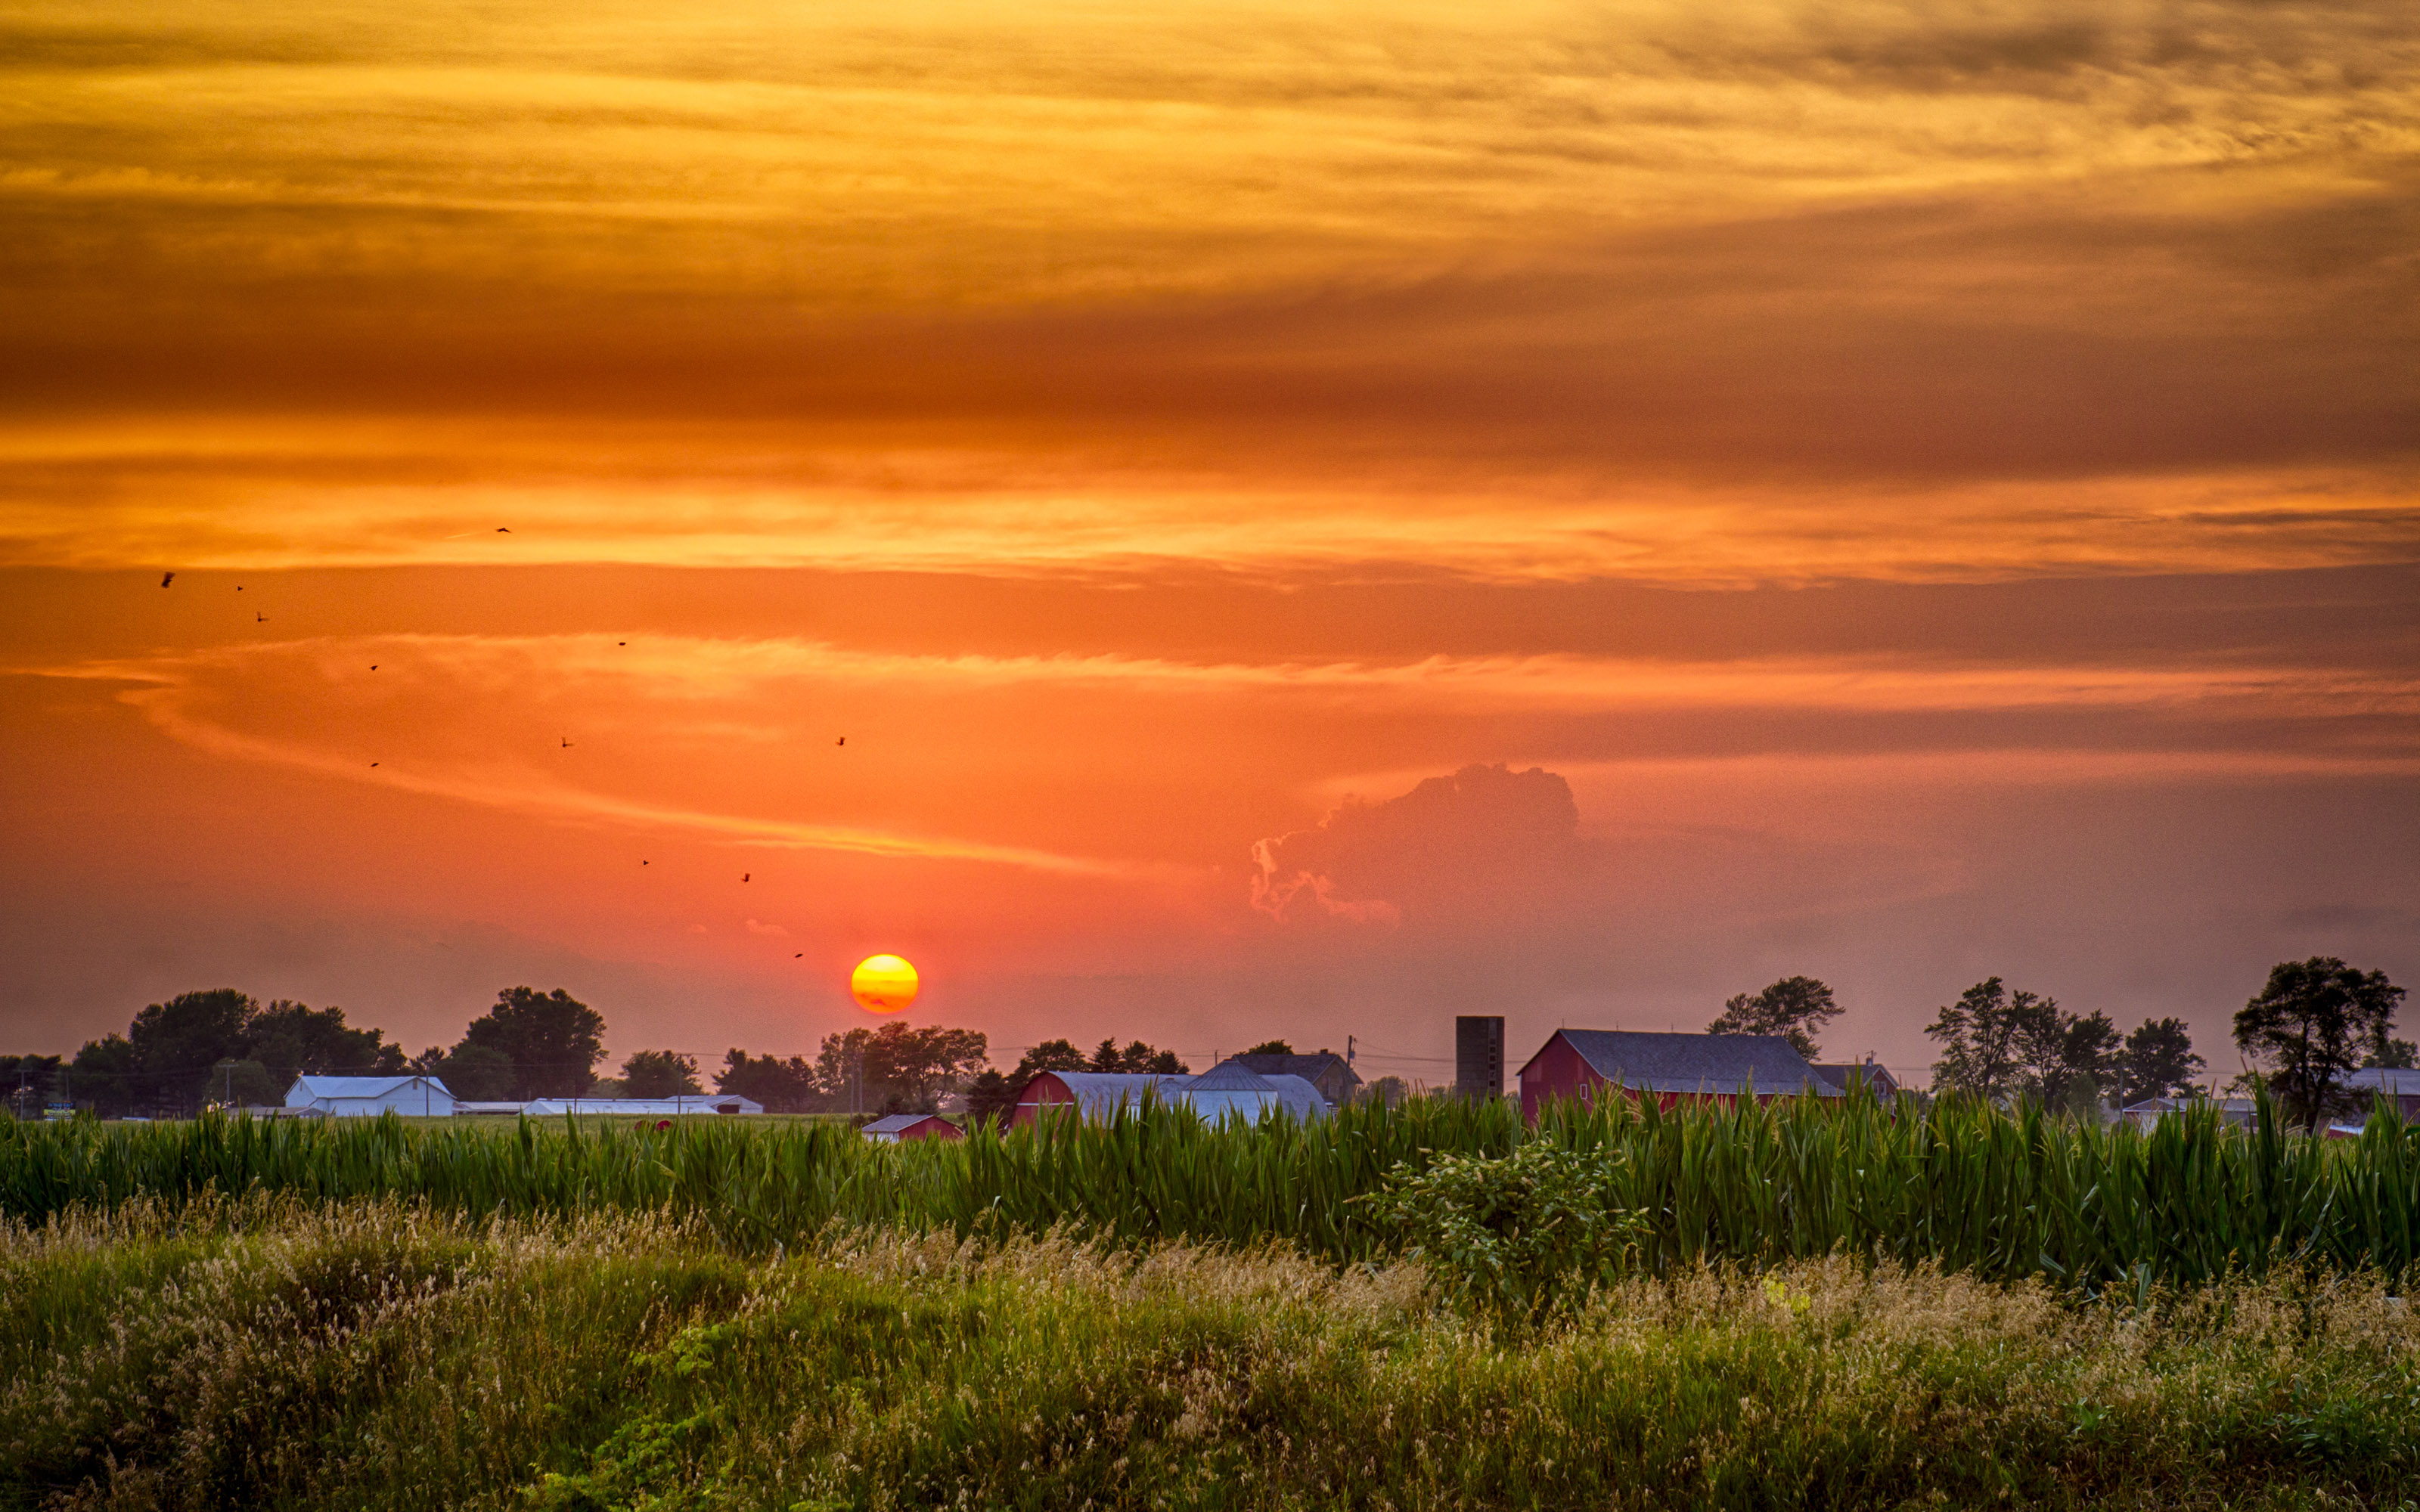 Sunset Picture Near Nappanee, Indiana Usa Wallpaper Widescreen Hd